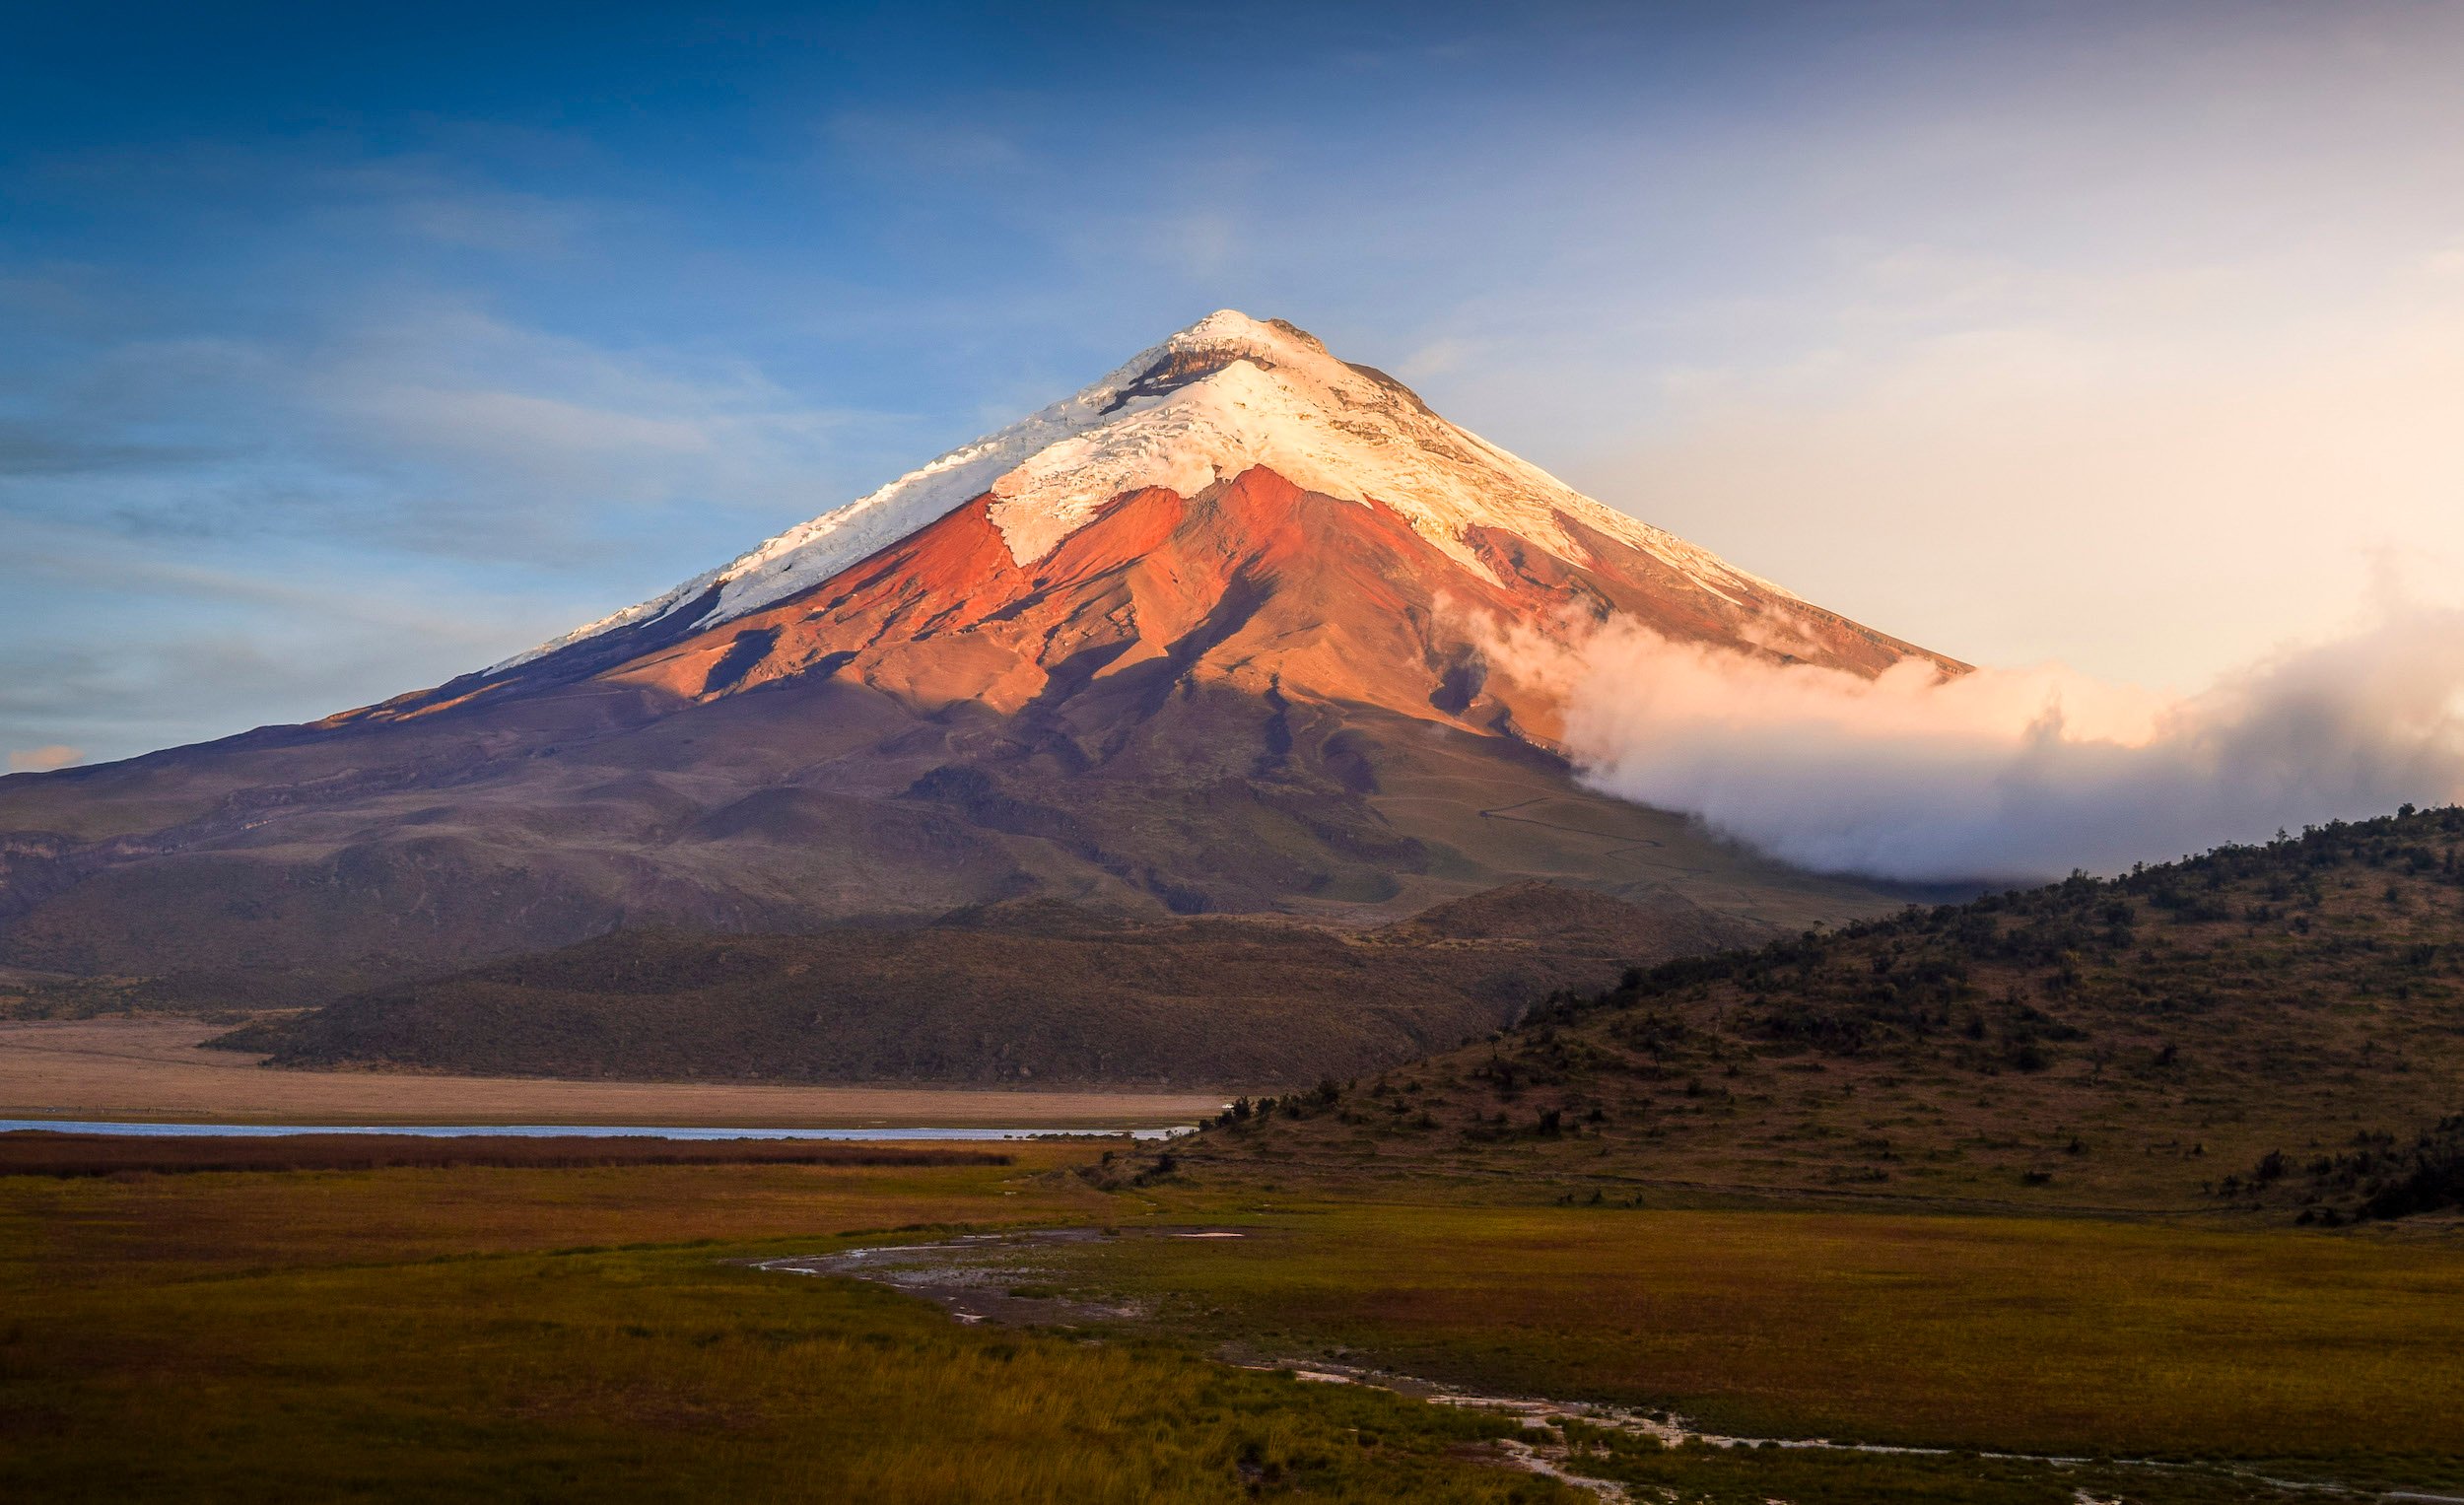 A sunrise view of the volcano Cotopaxi in Ecuador